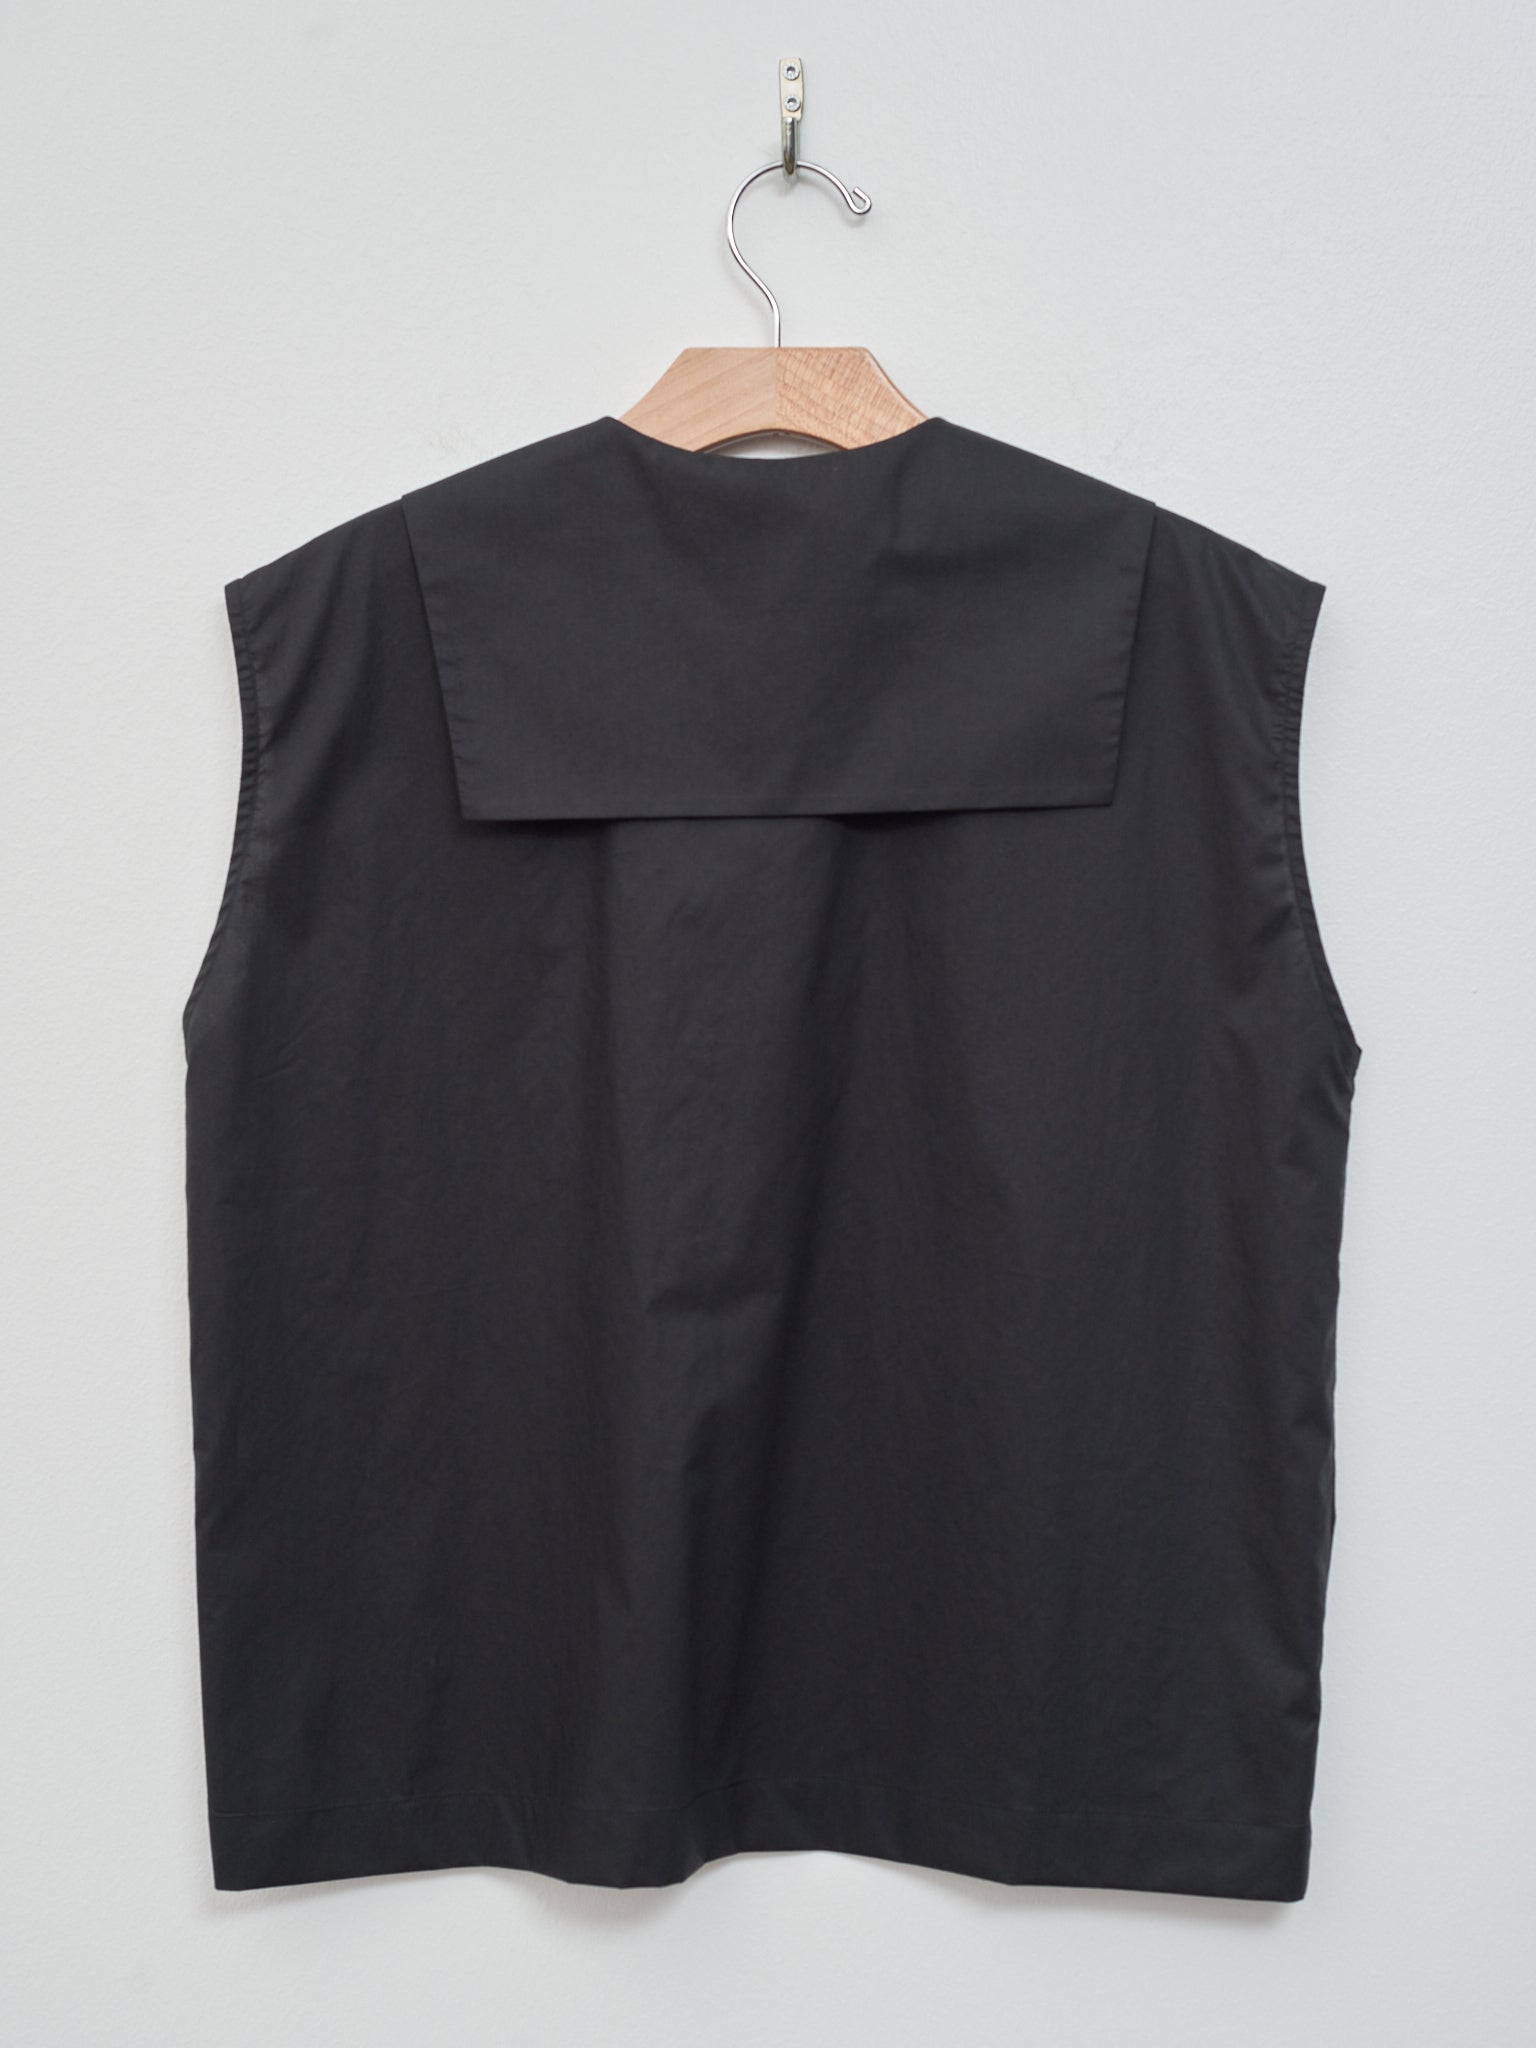 Namu Shop - Nicholson & Nicholson Lala Poplin Shirt - Black